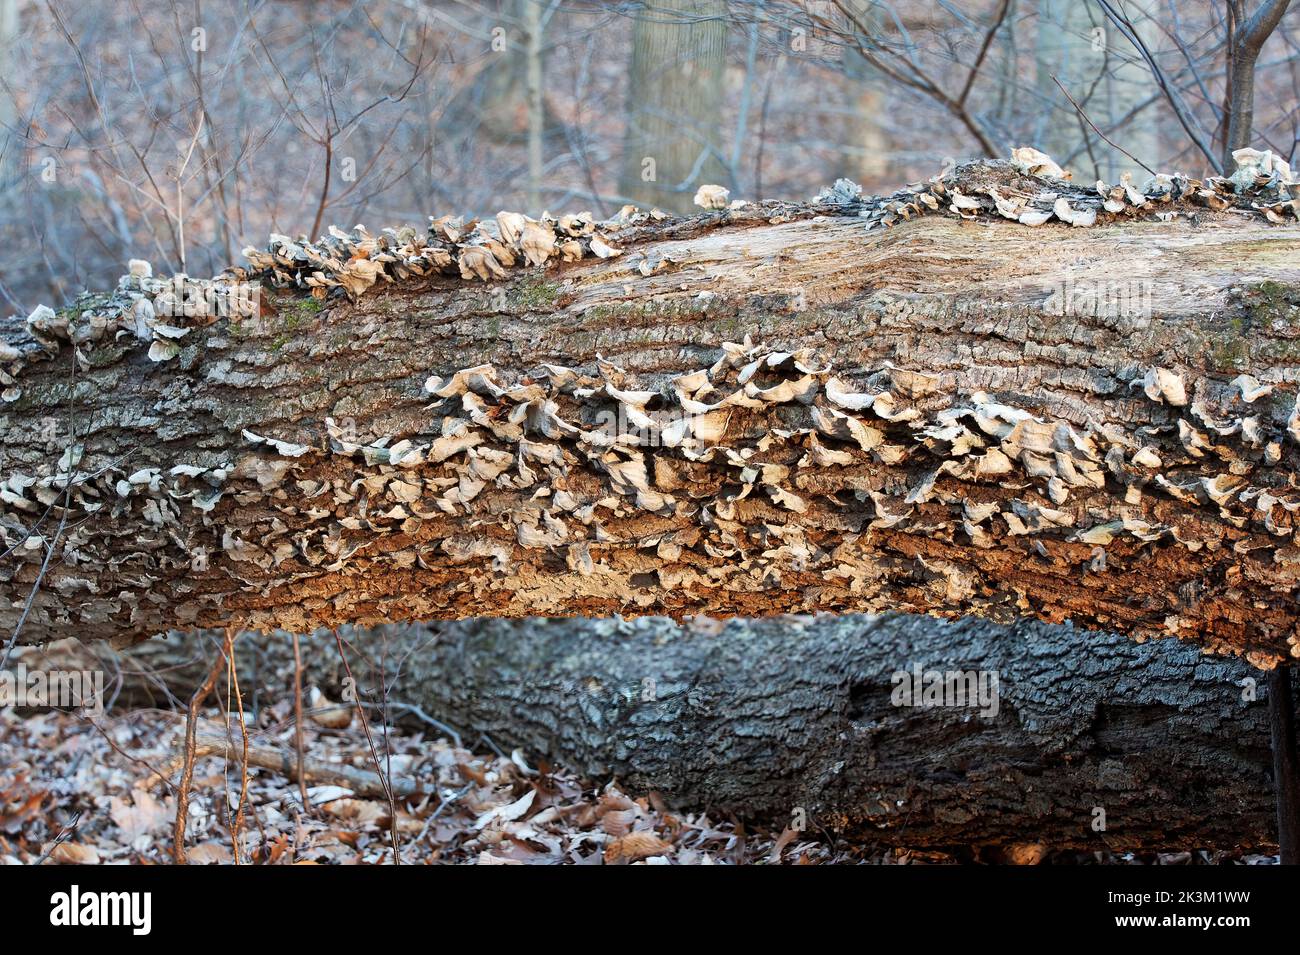 Decomposing log in woodland habitat with fungi Stock Photo